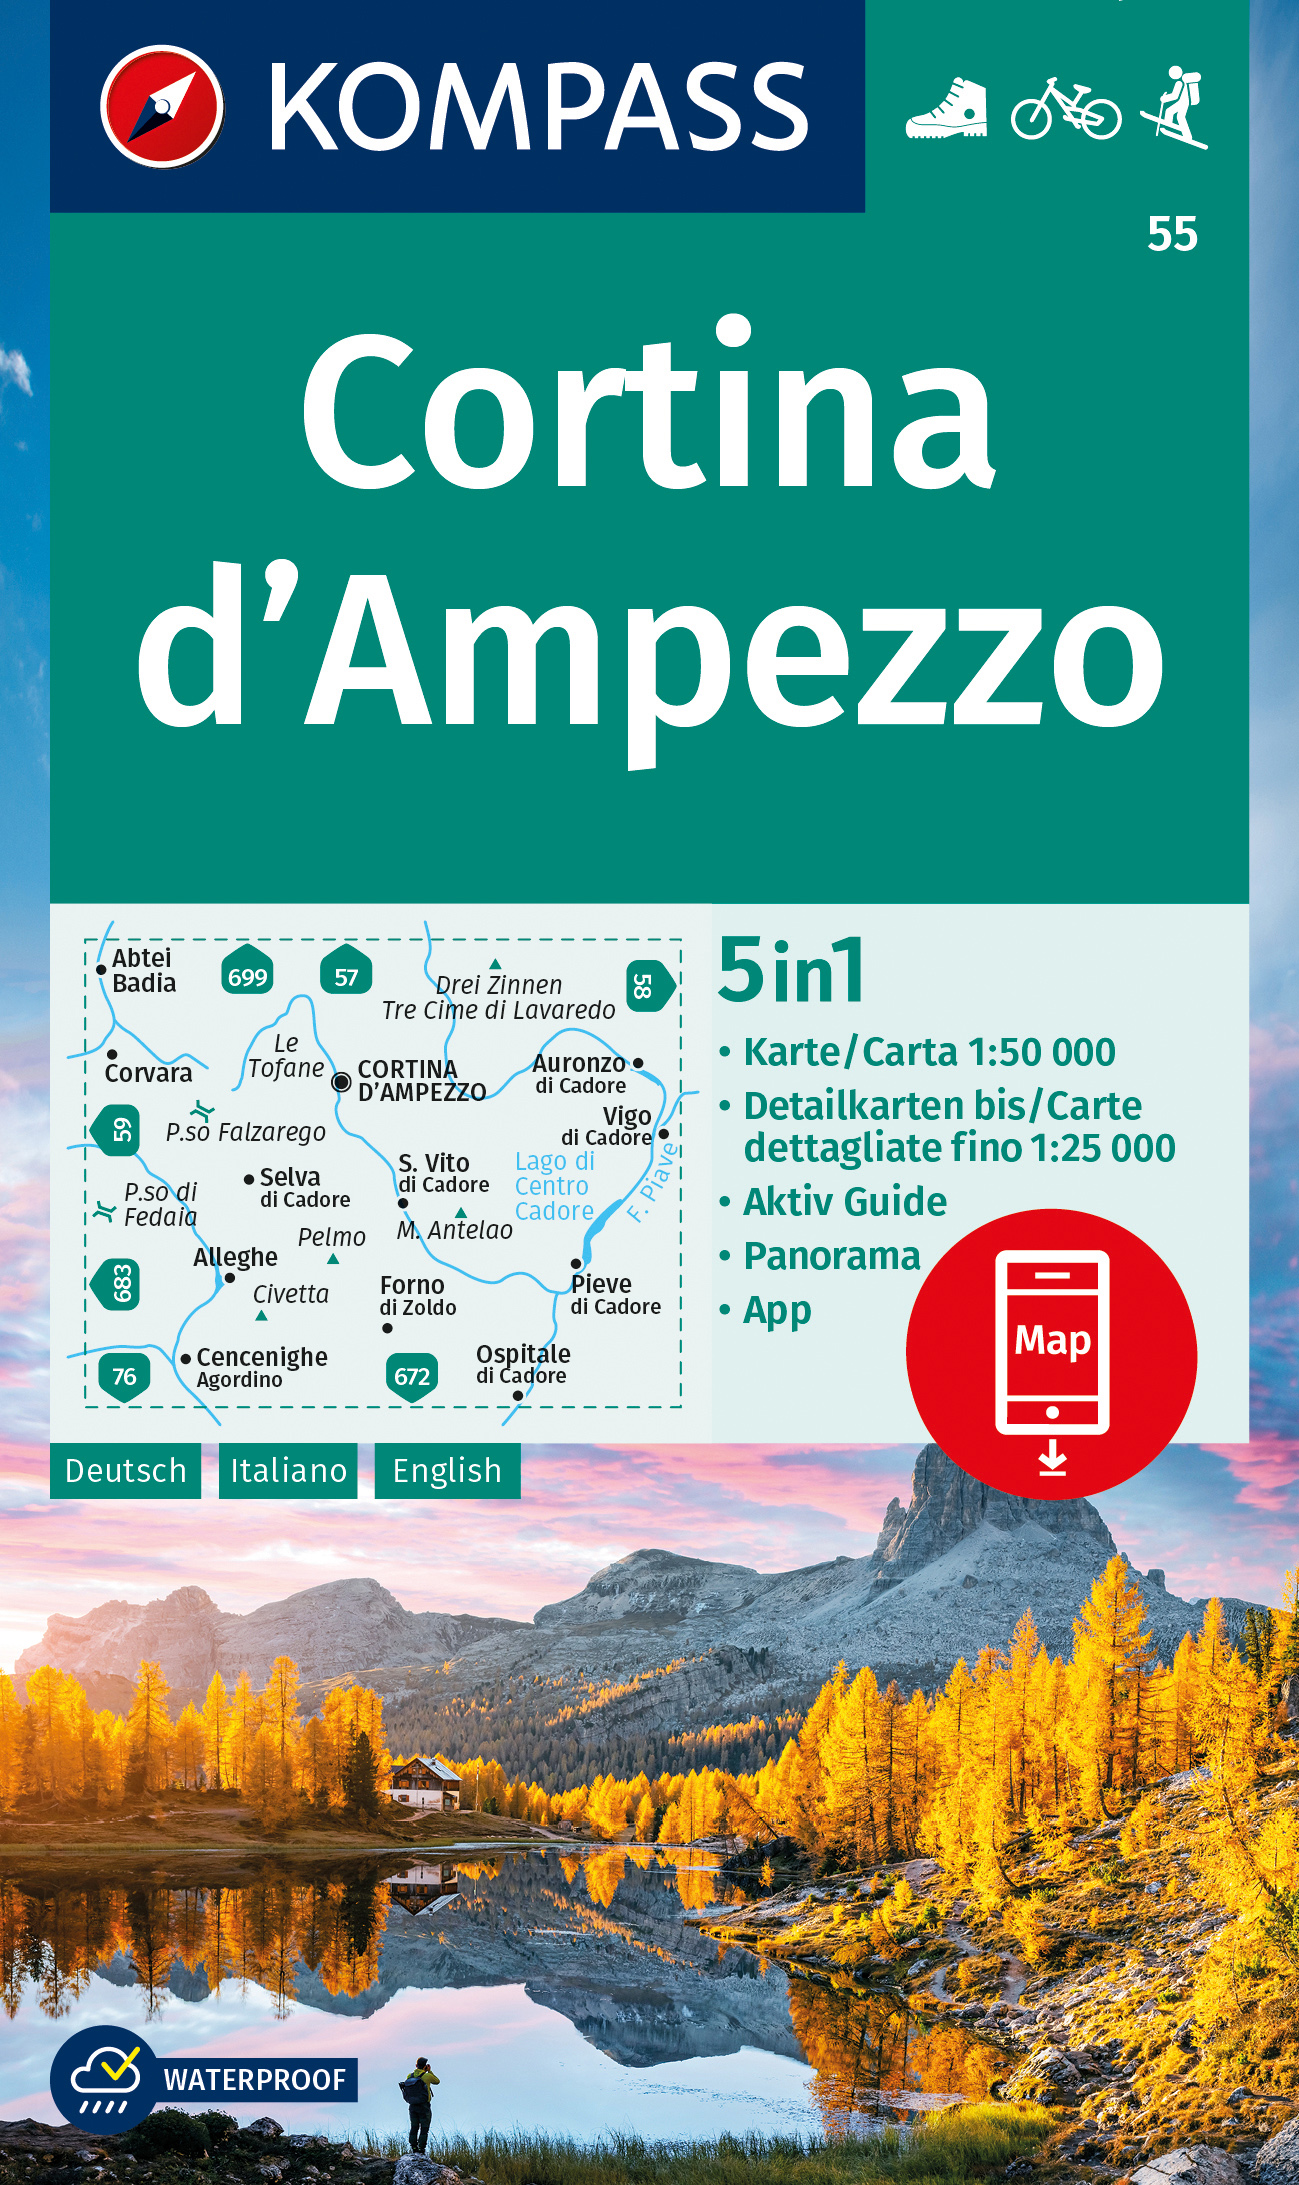 Cortina d'Ampezzo (Kompass - 55) - turistická mapa